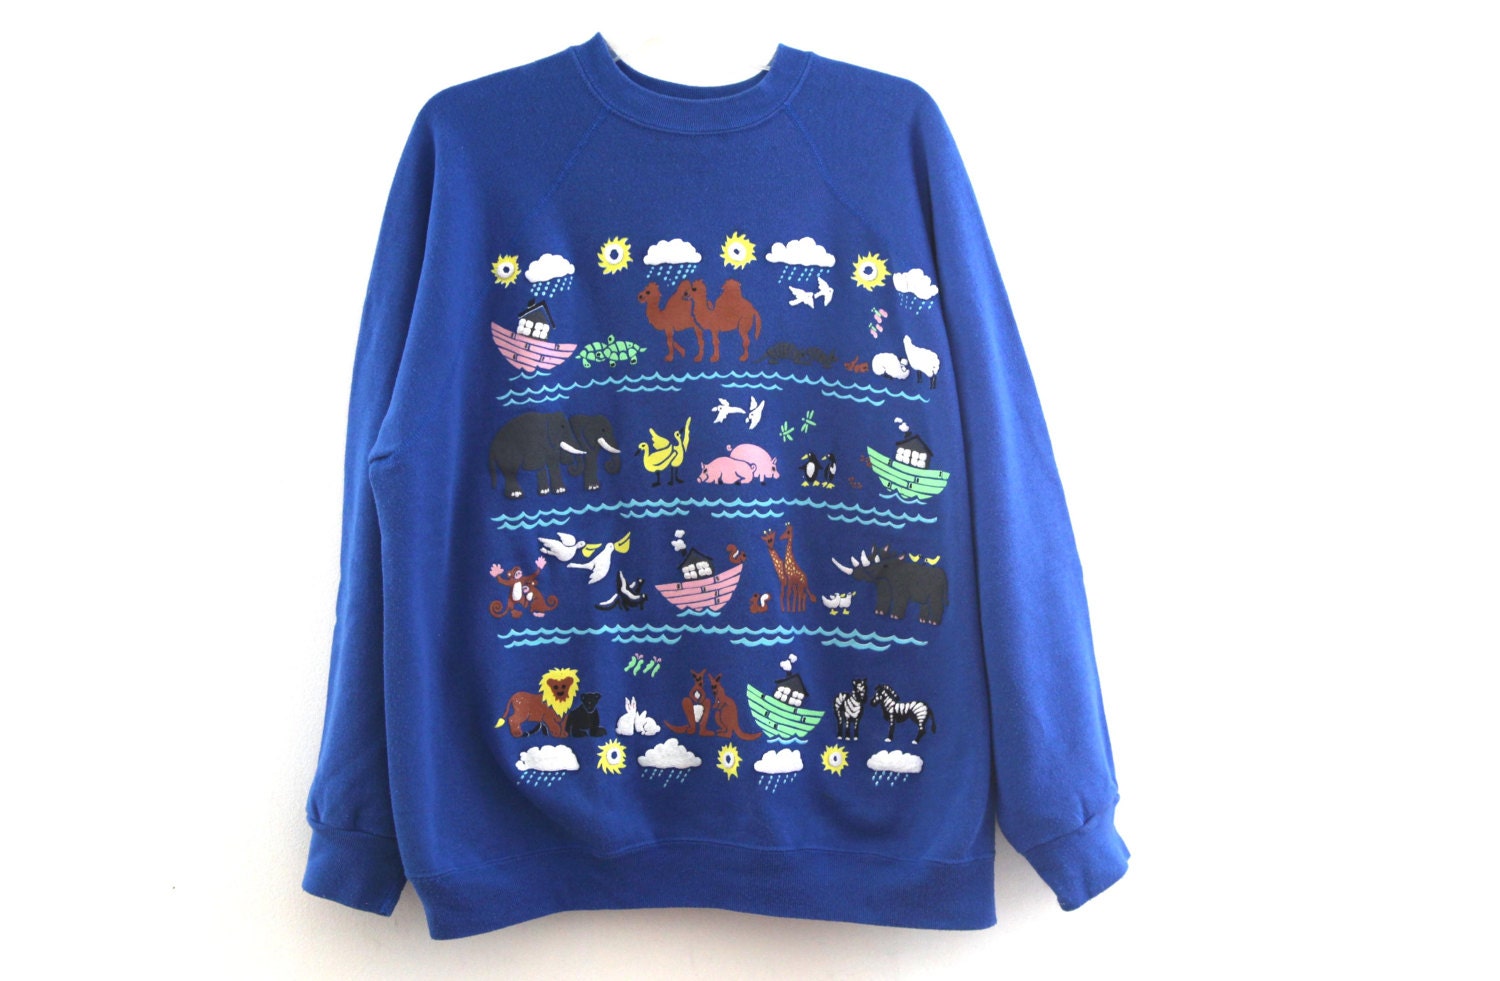 Vintage Noah's ark sweatshirt puffy paint 80s 90s animals